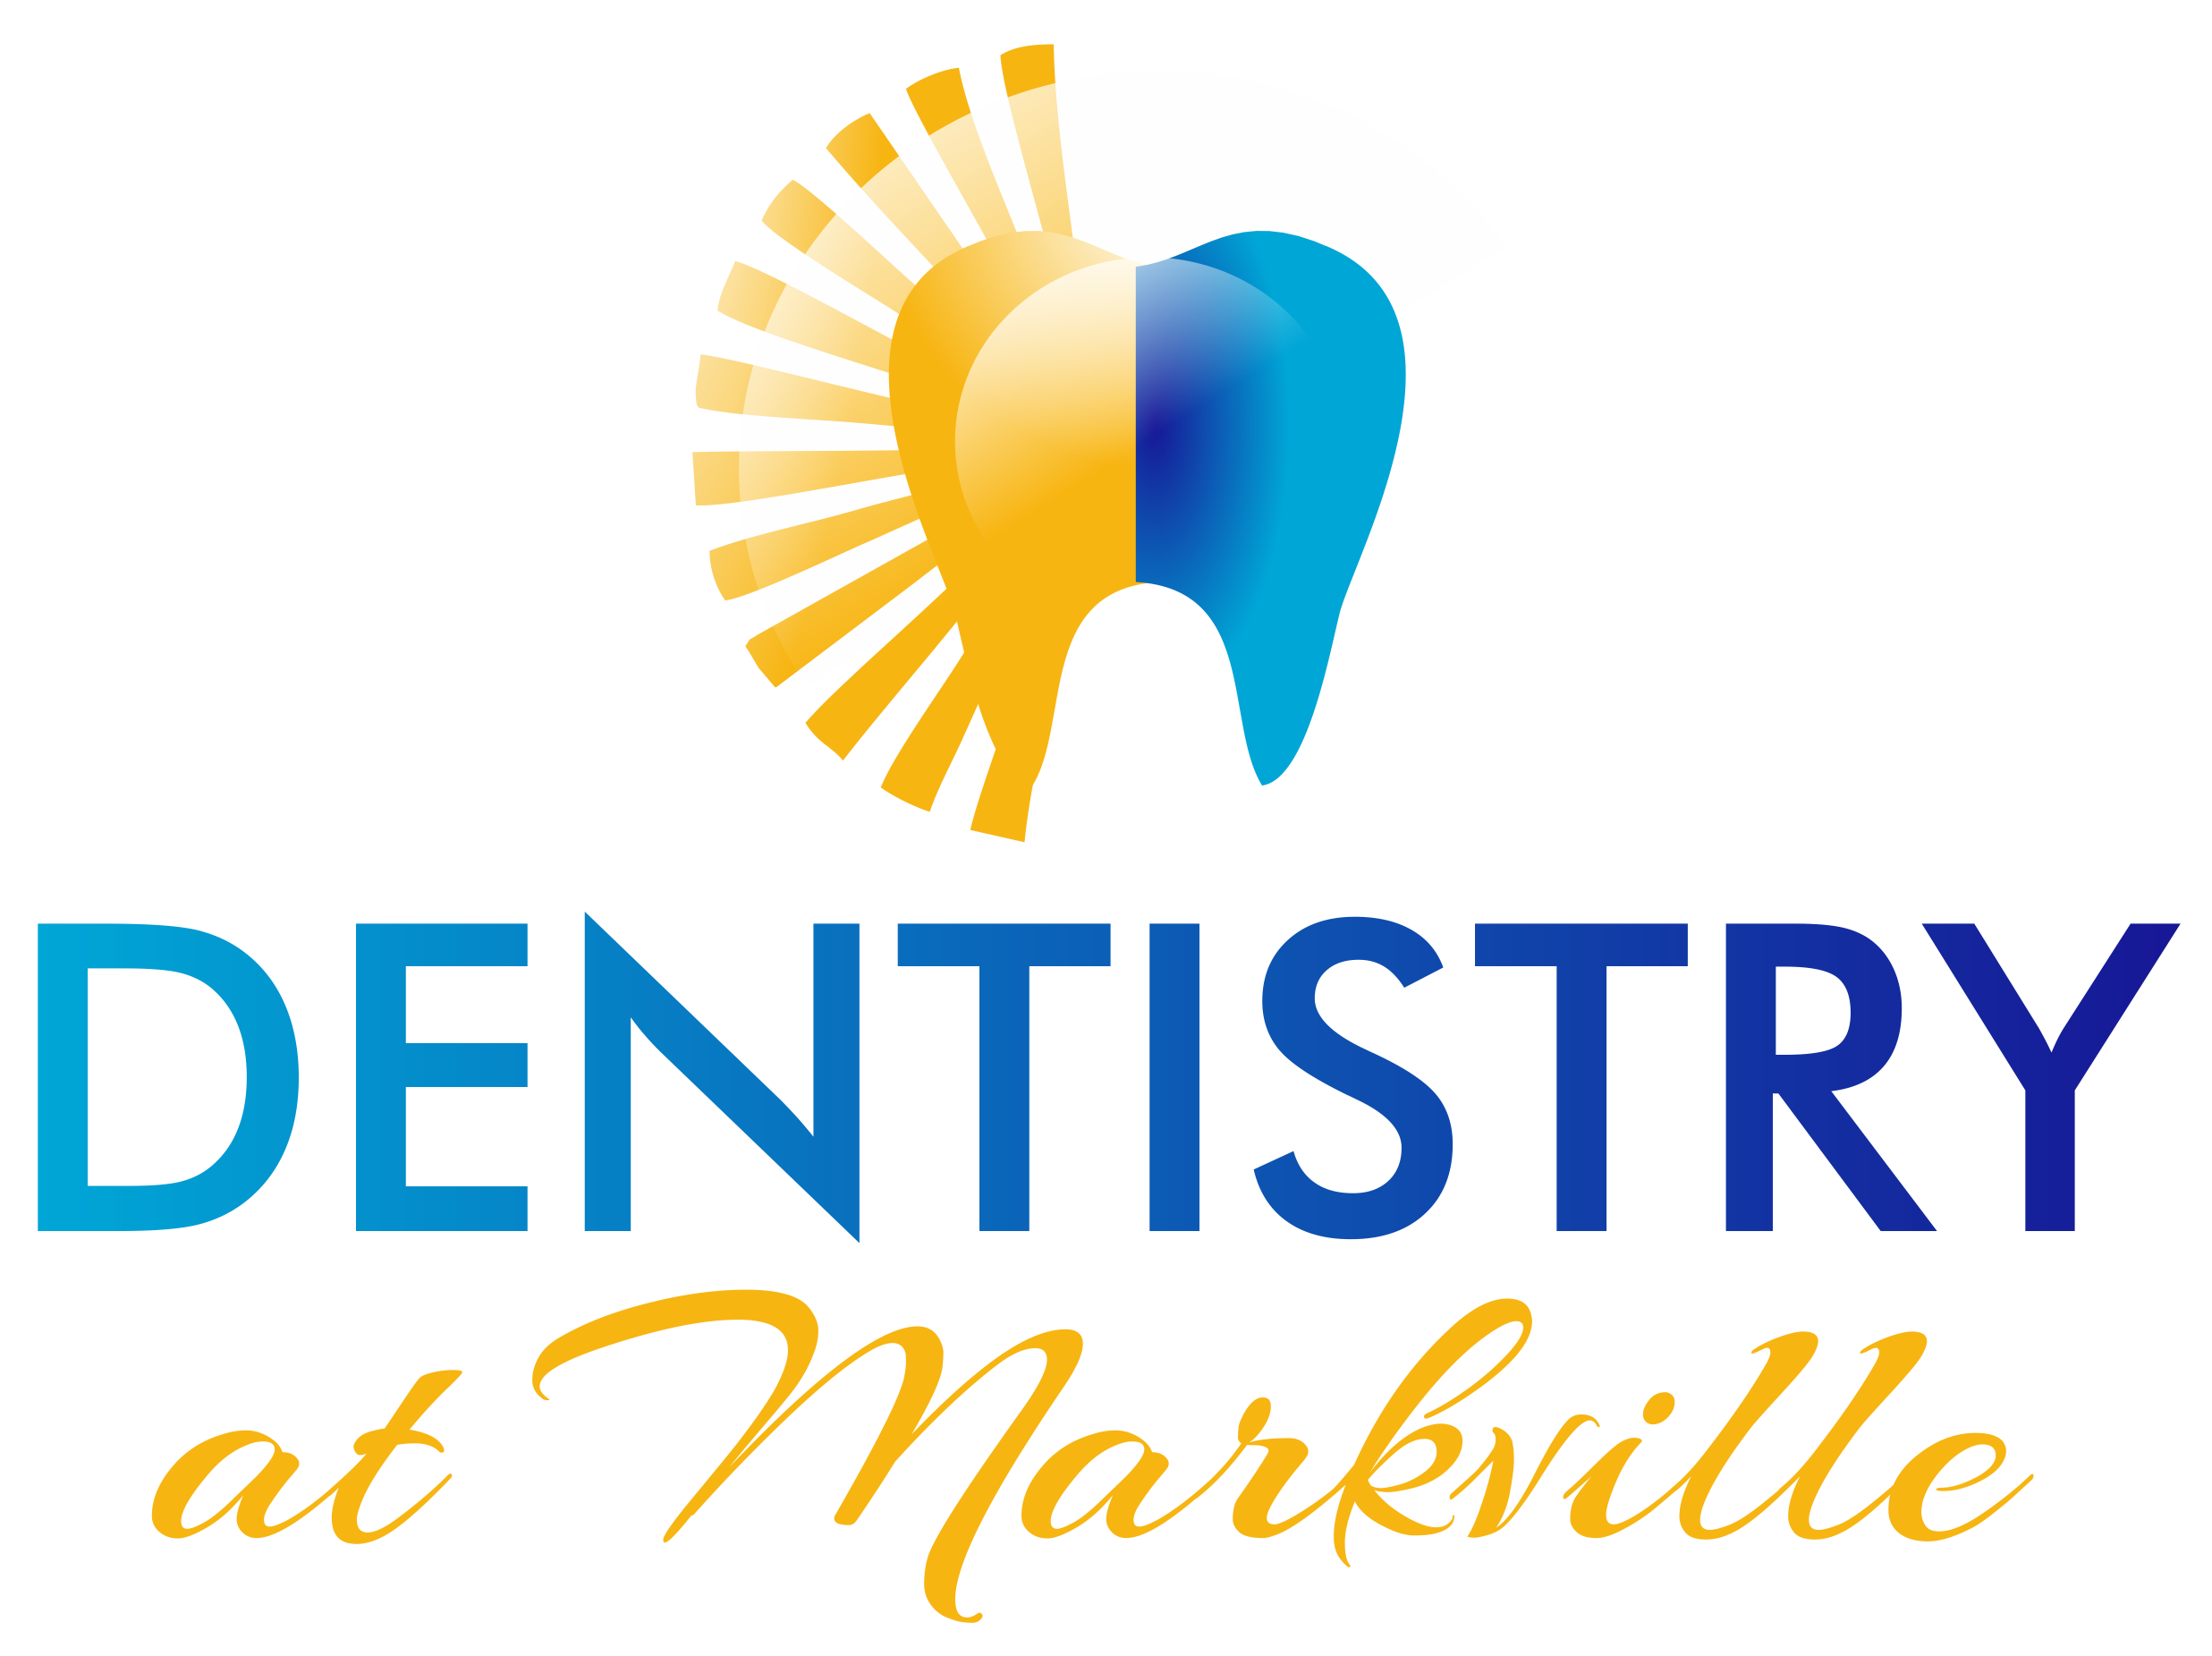 Dentistry at Markville